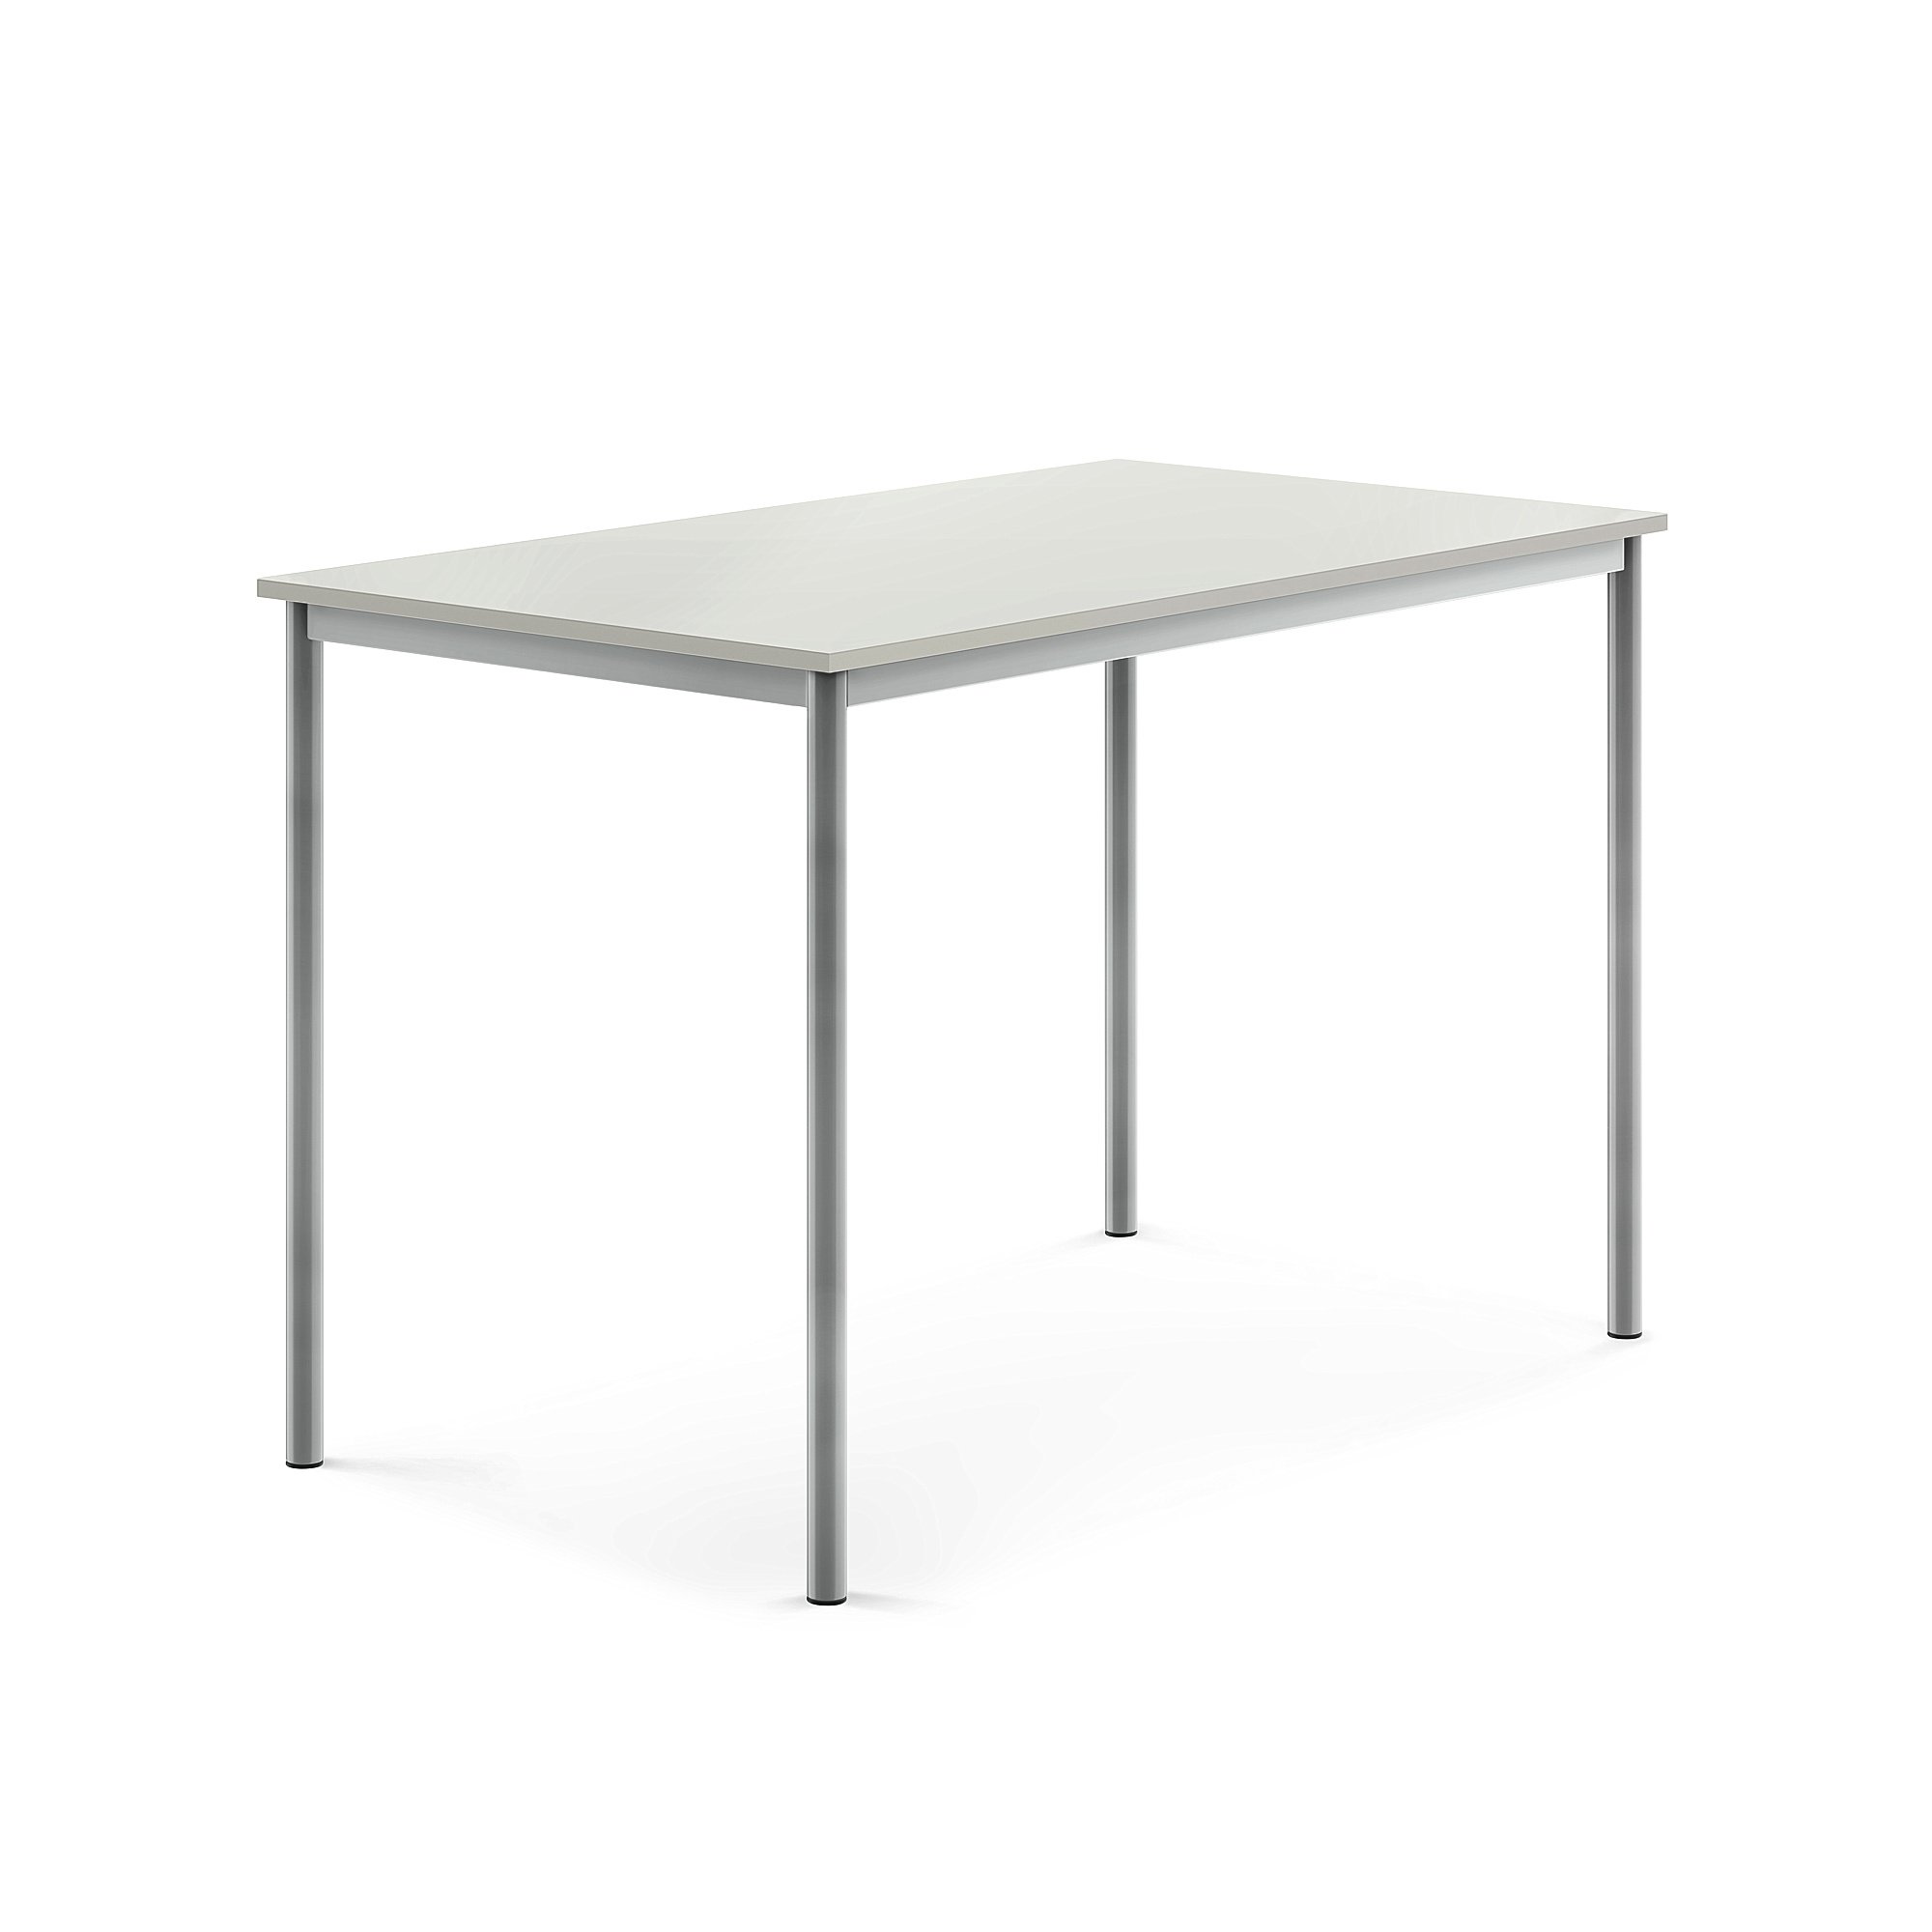 Stůl BORÅS, 1400x800x900 mm, stříbrné nohy, HPL deska, šedá